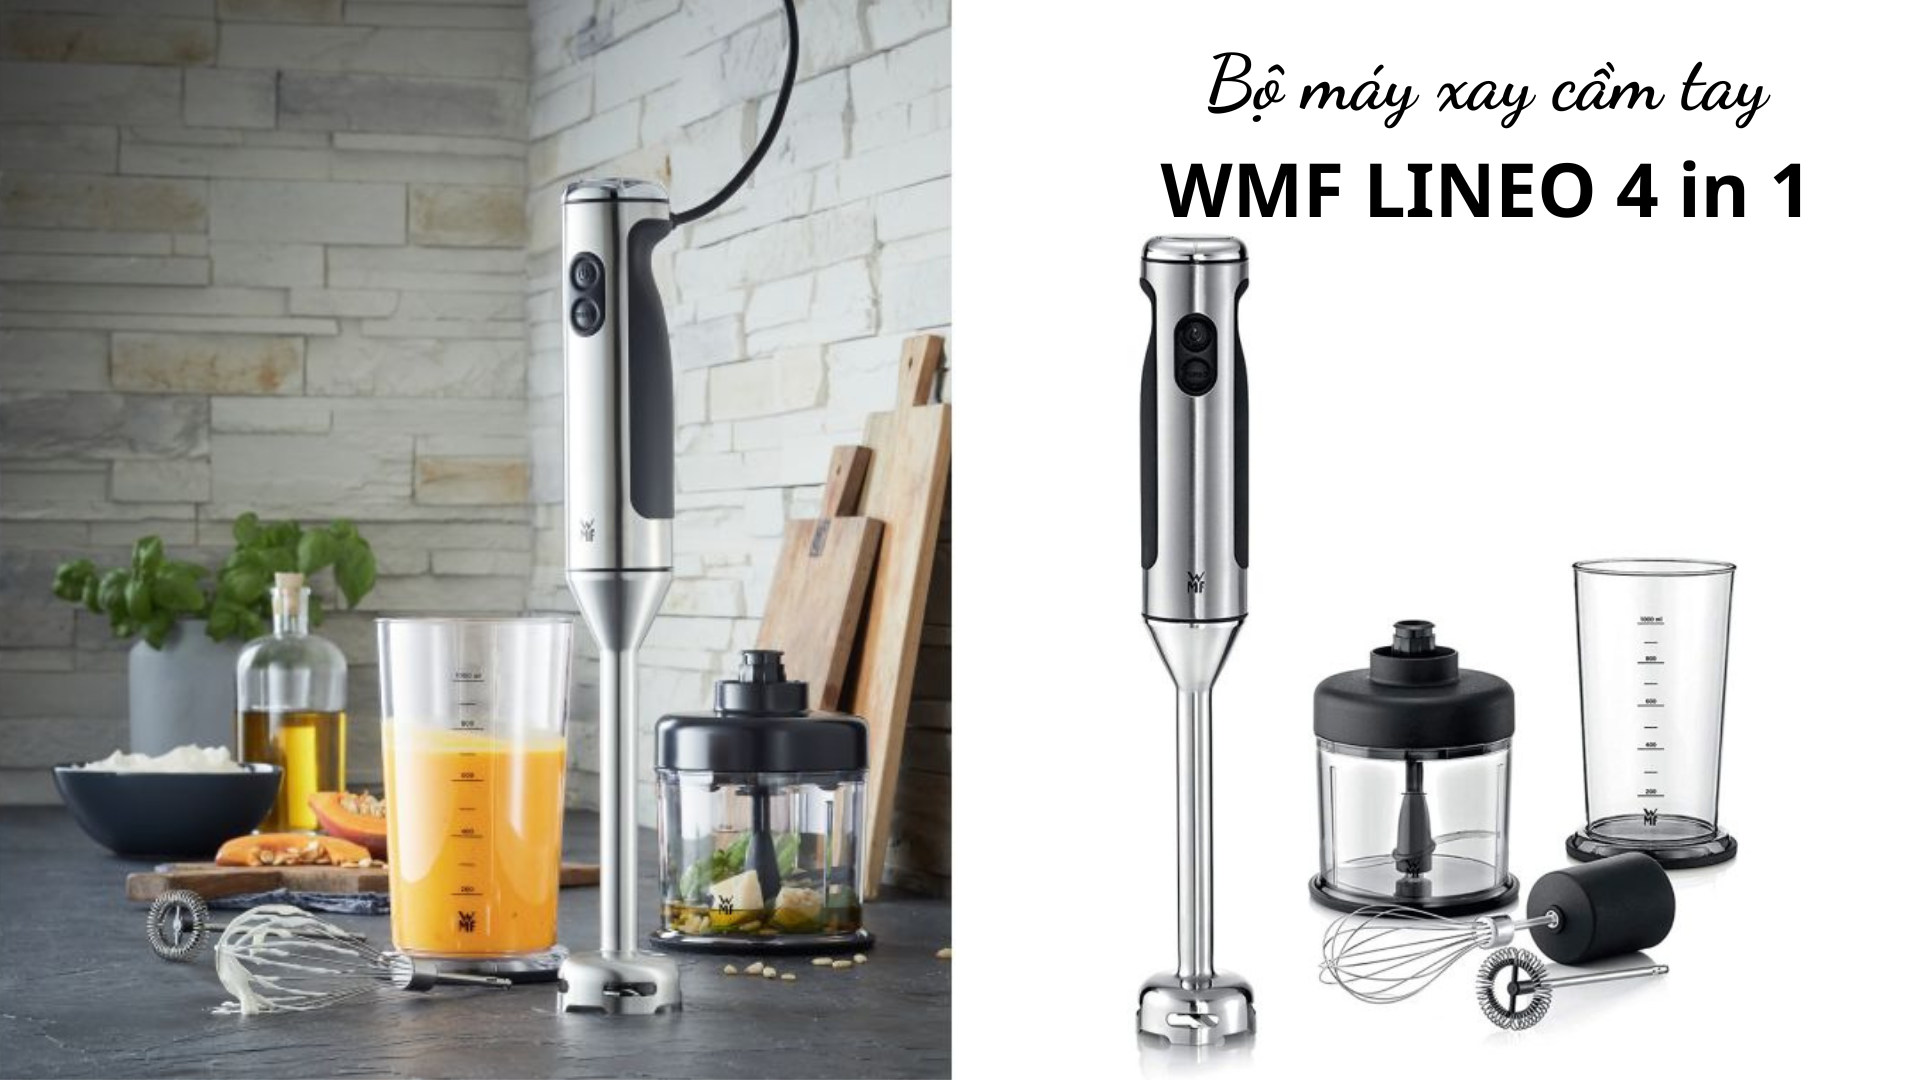 WMF Lineo 4-in-1 Stick Blender